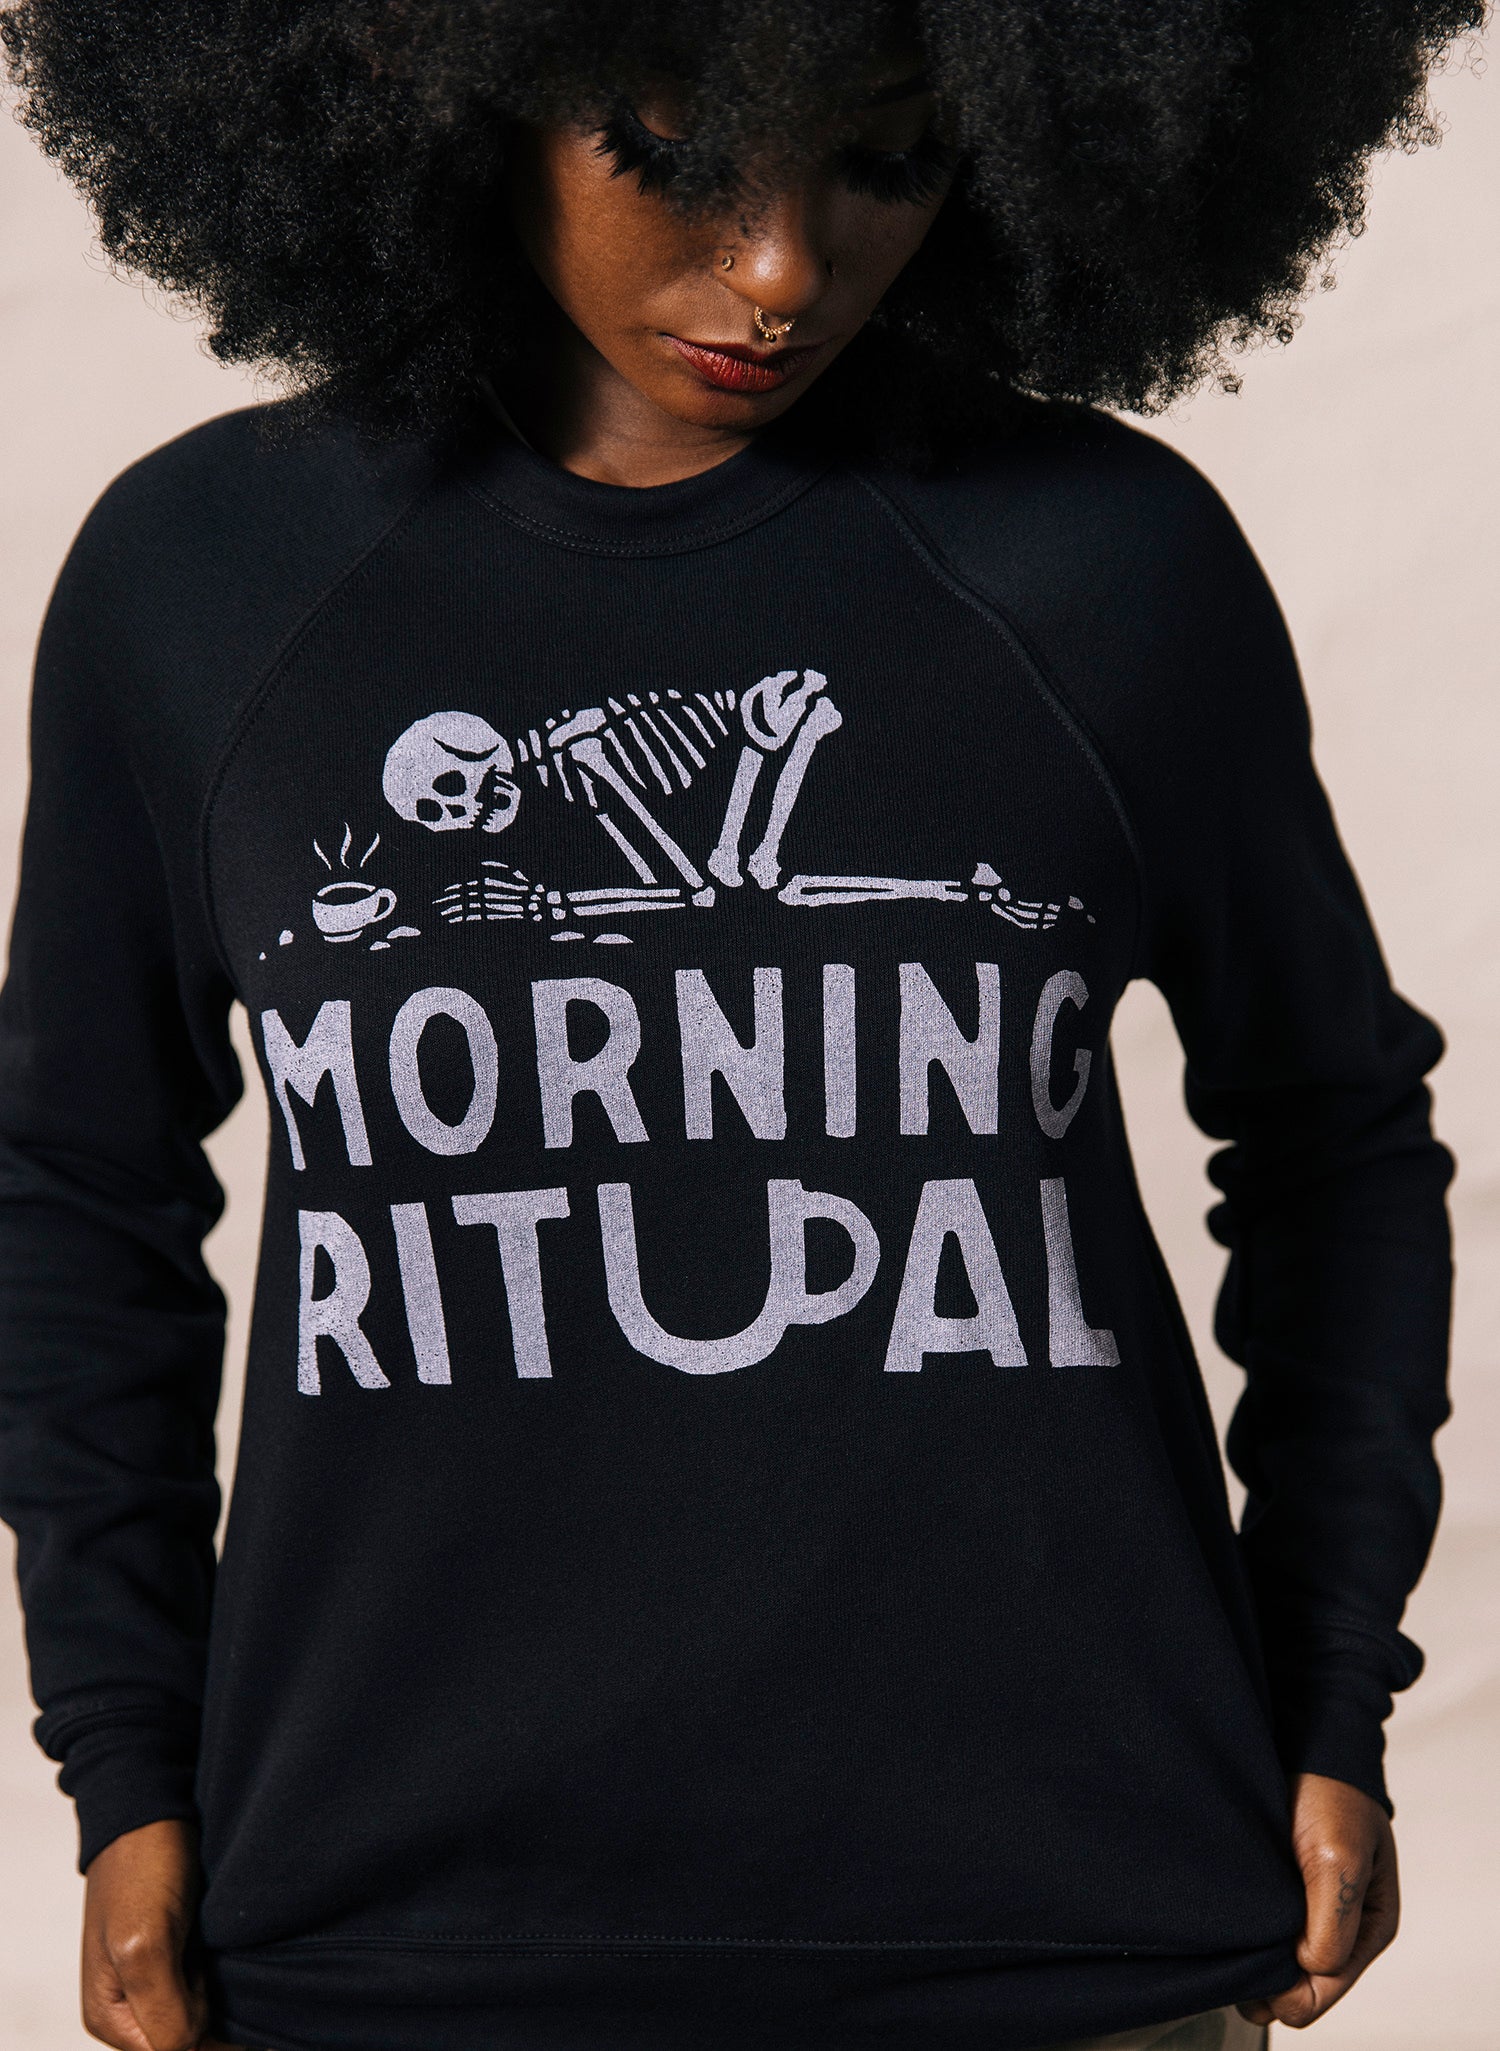 Morning Ritual Skeleton Bones Coffee Sweatshirt Jumper for Coffee Lovers, Foodies, Baristas, Cafe